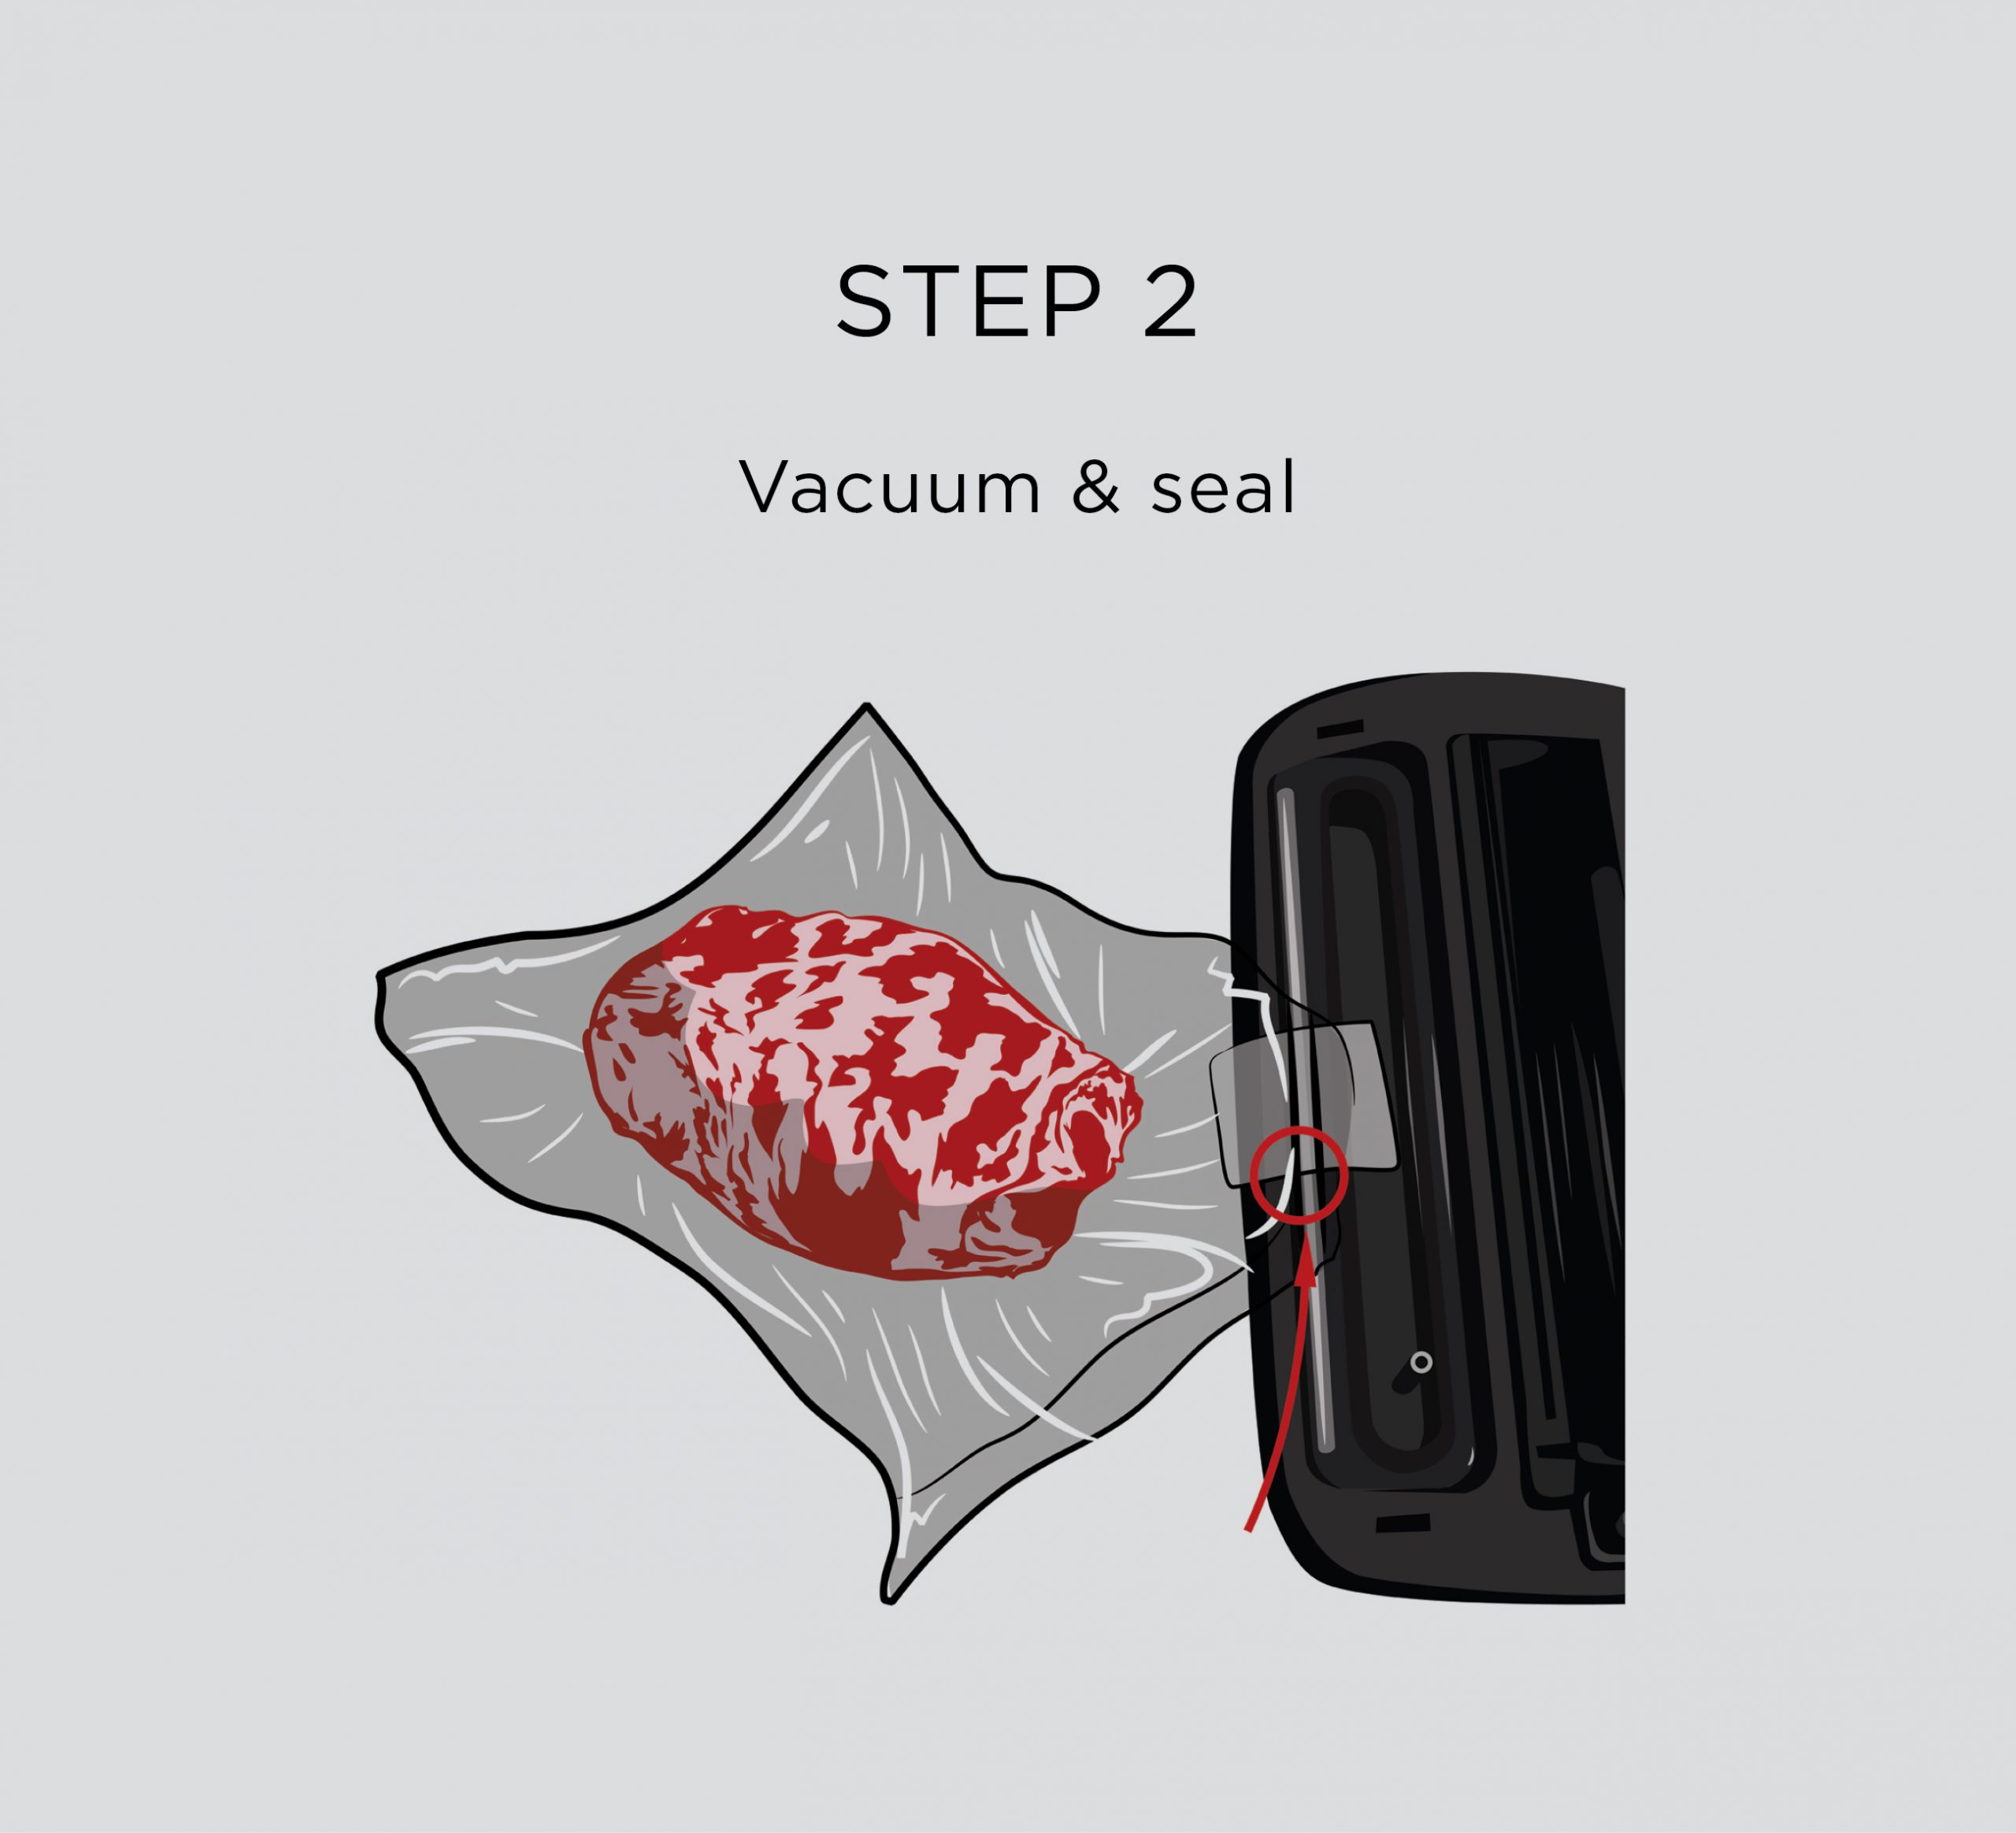 Step 2: Vacuum & seal